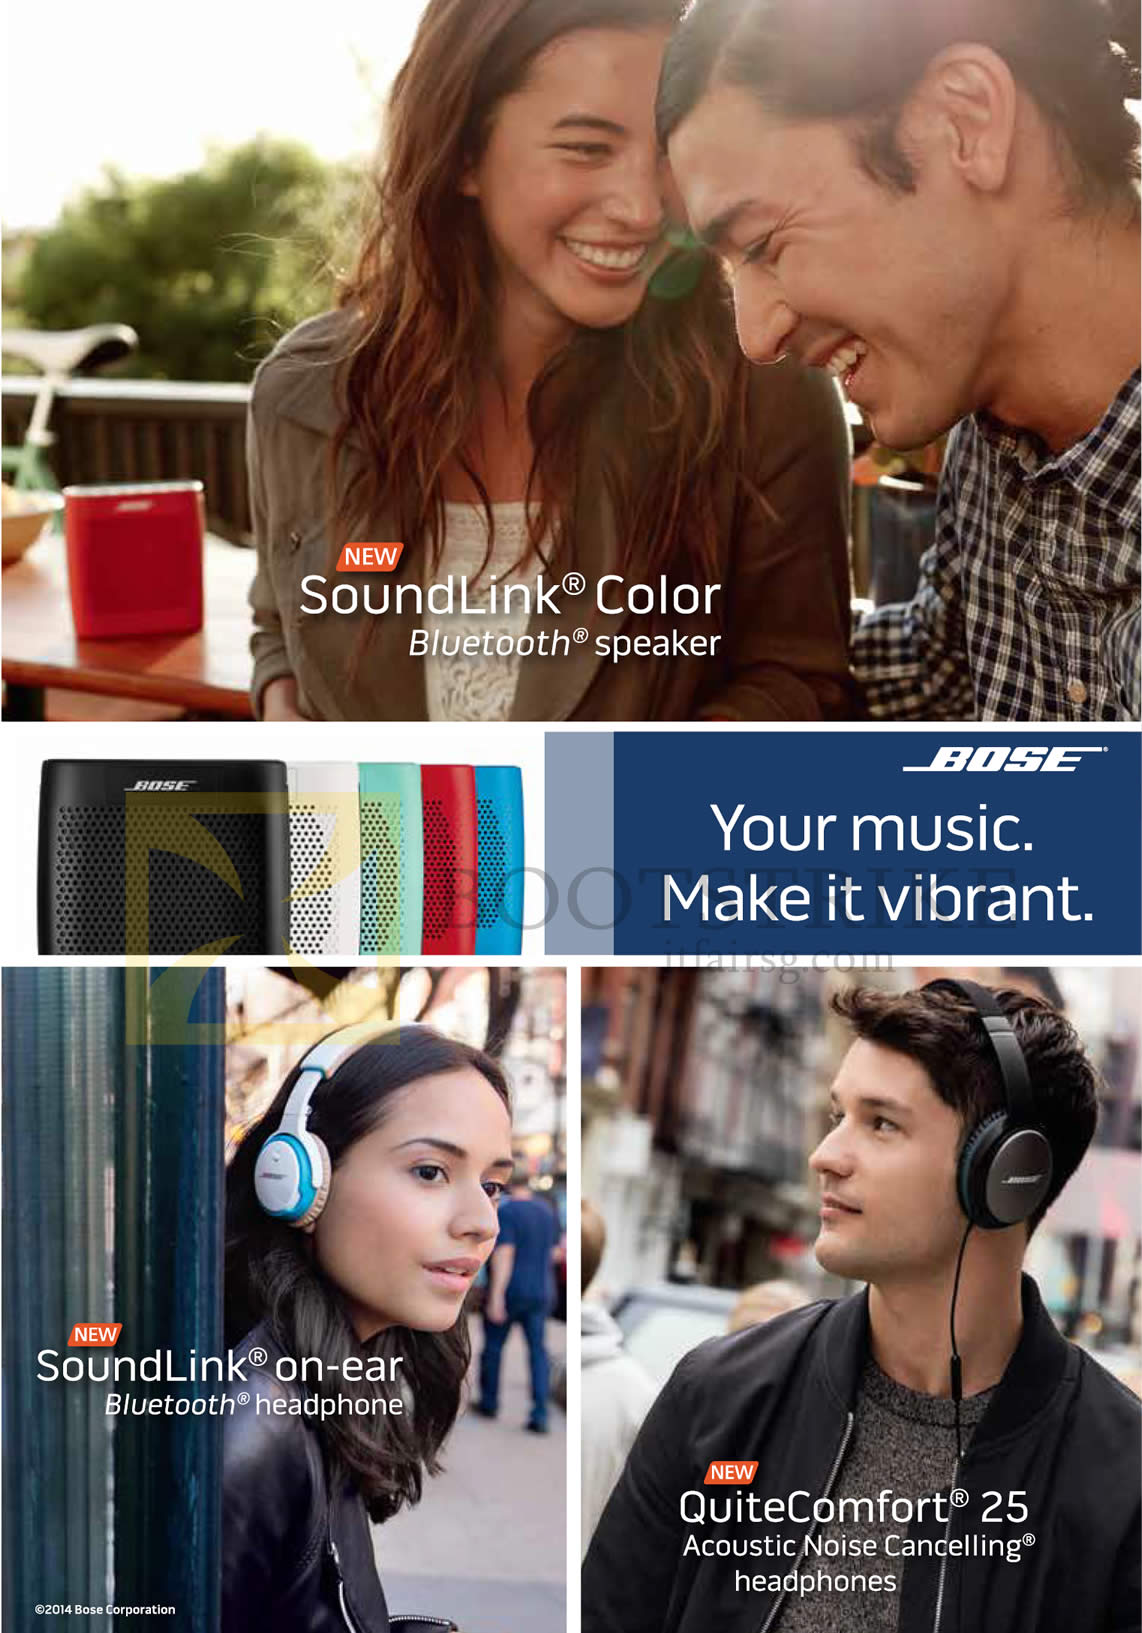 SITEX 2014 price list image brochure of Epicentre Bose SoundLink Color Bluetooth Speaker, On-ear, QuiteComfort 25 Headphones